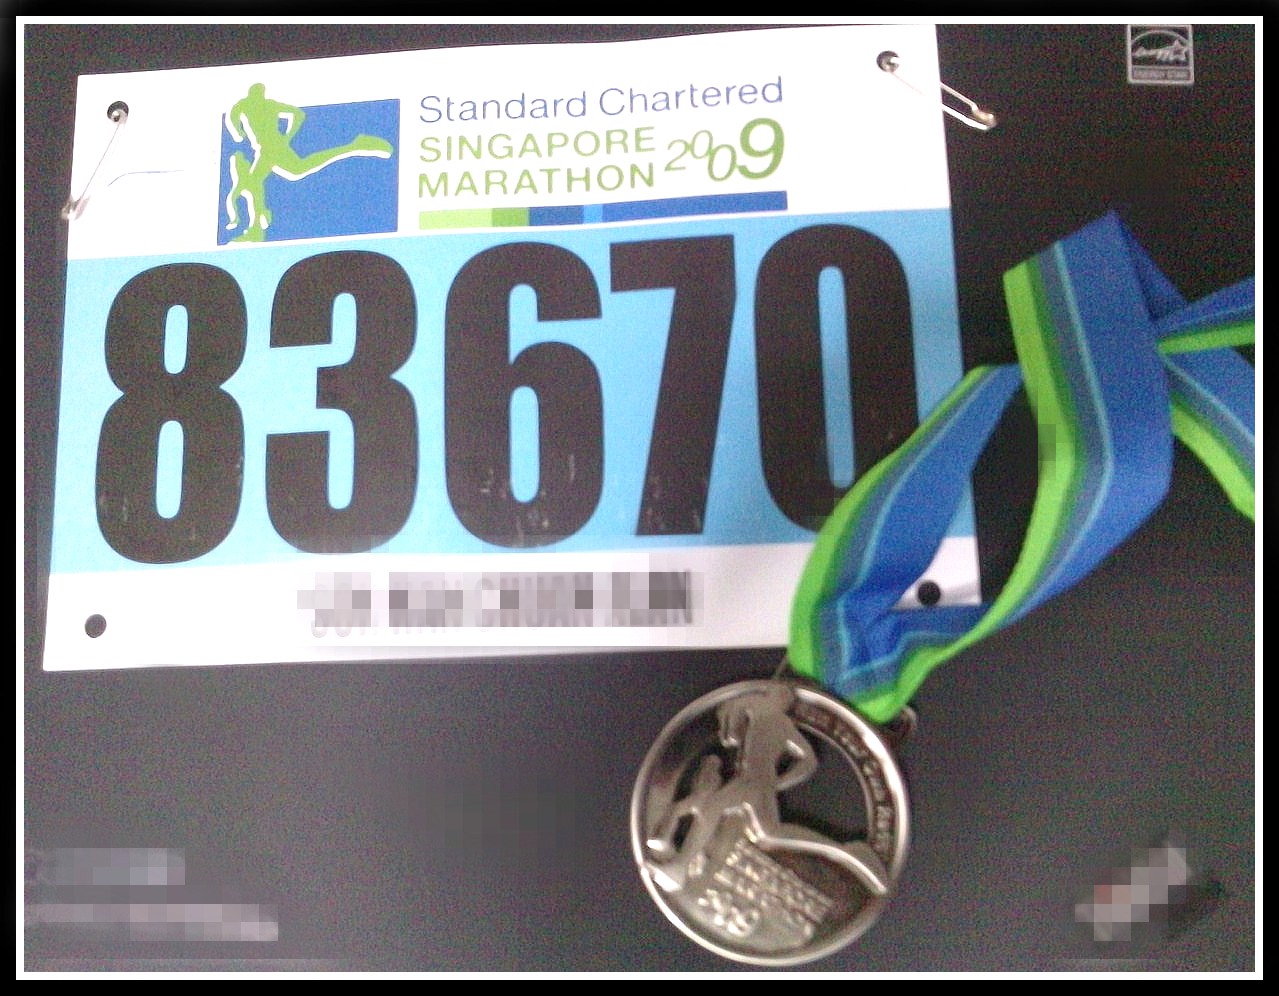 Standard Chartered Marathon Singapore 2009 « Alan Soh